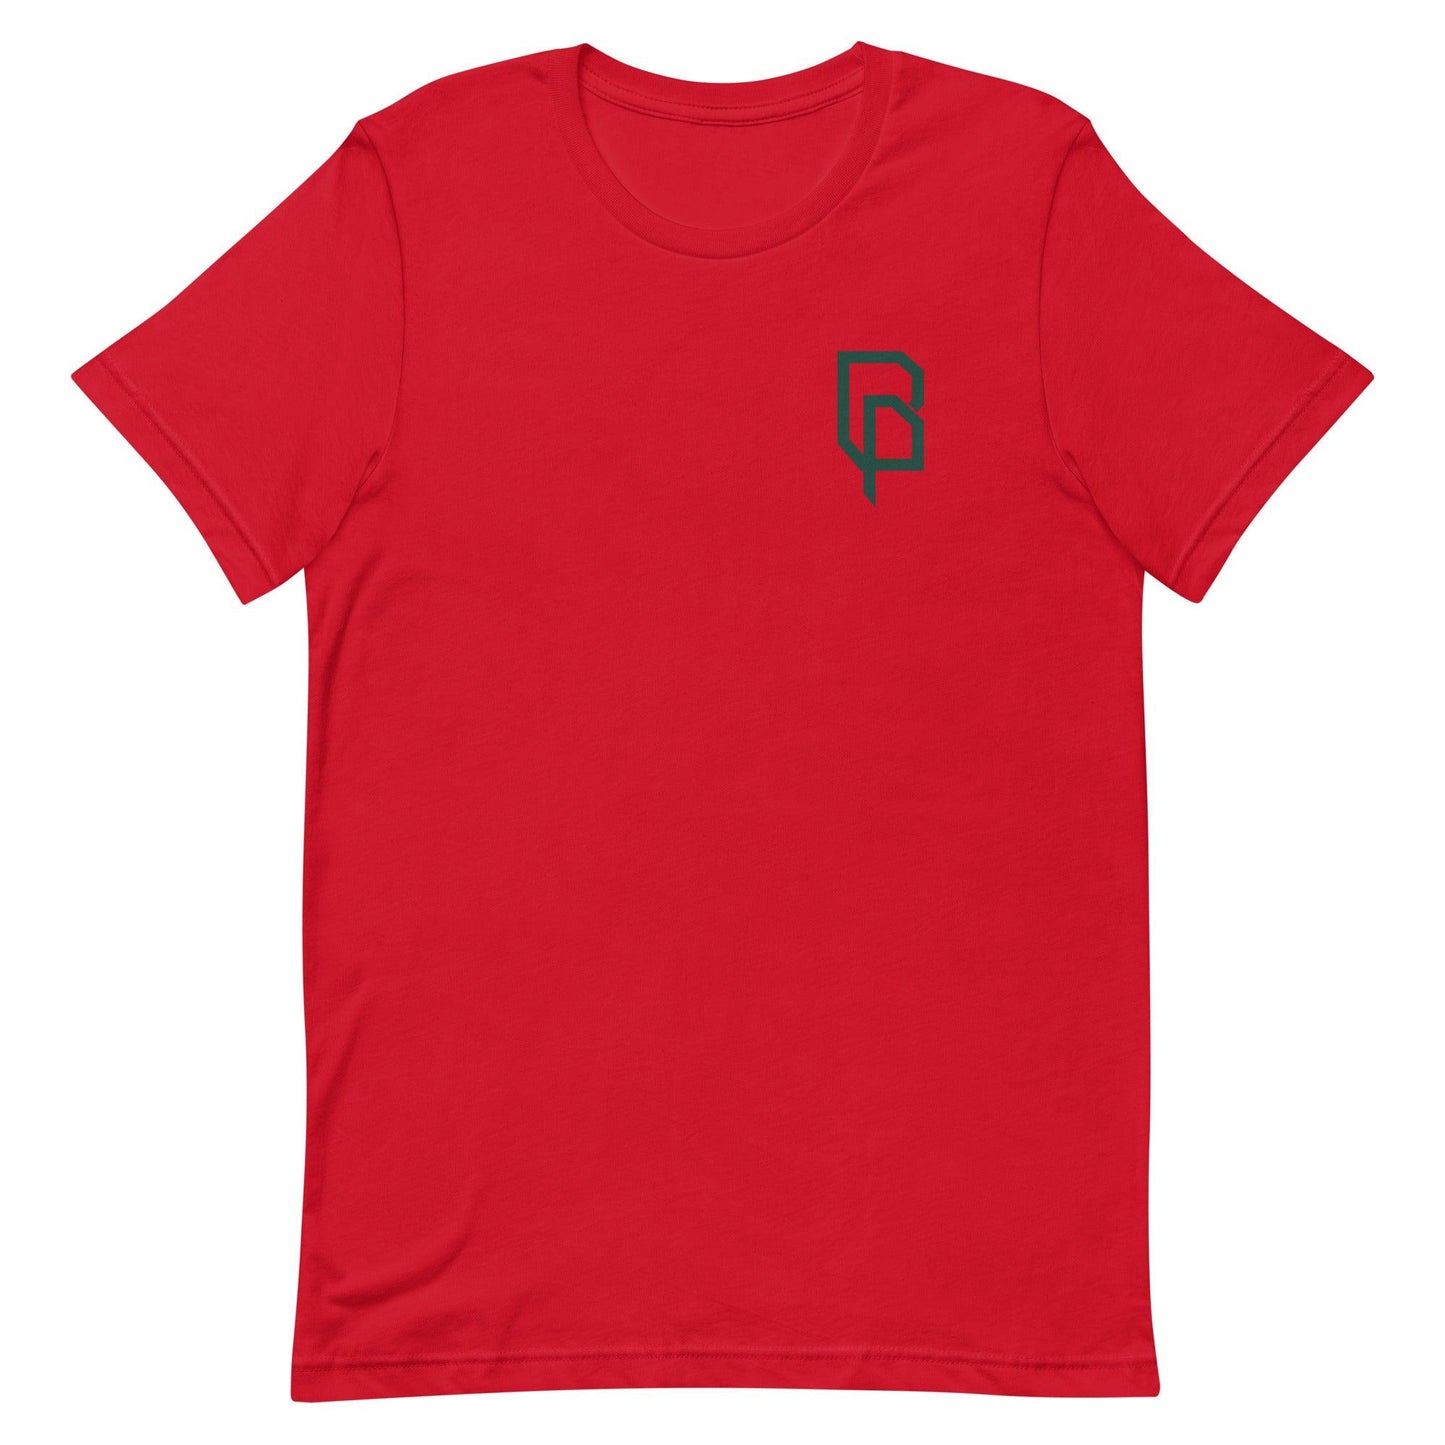 Brennan Parachek "Essential" t-shirt - Fan Arch